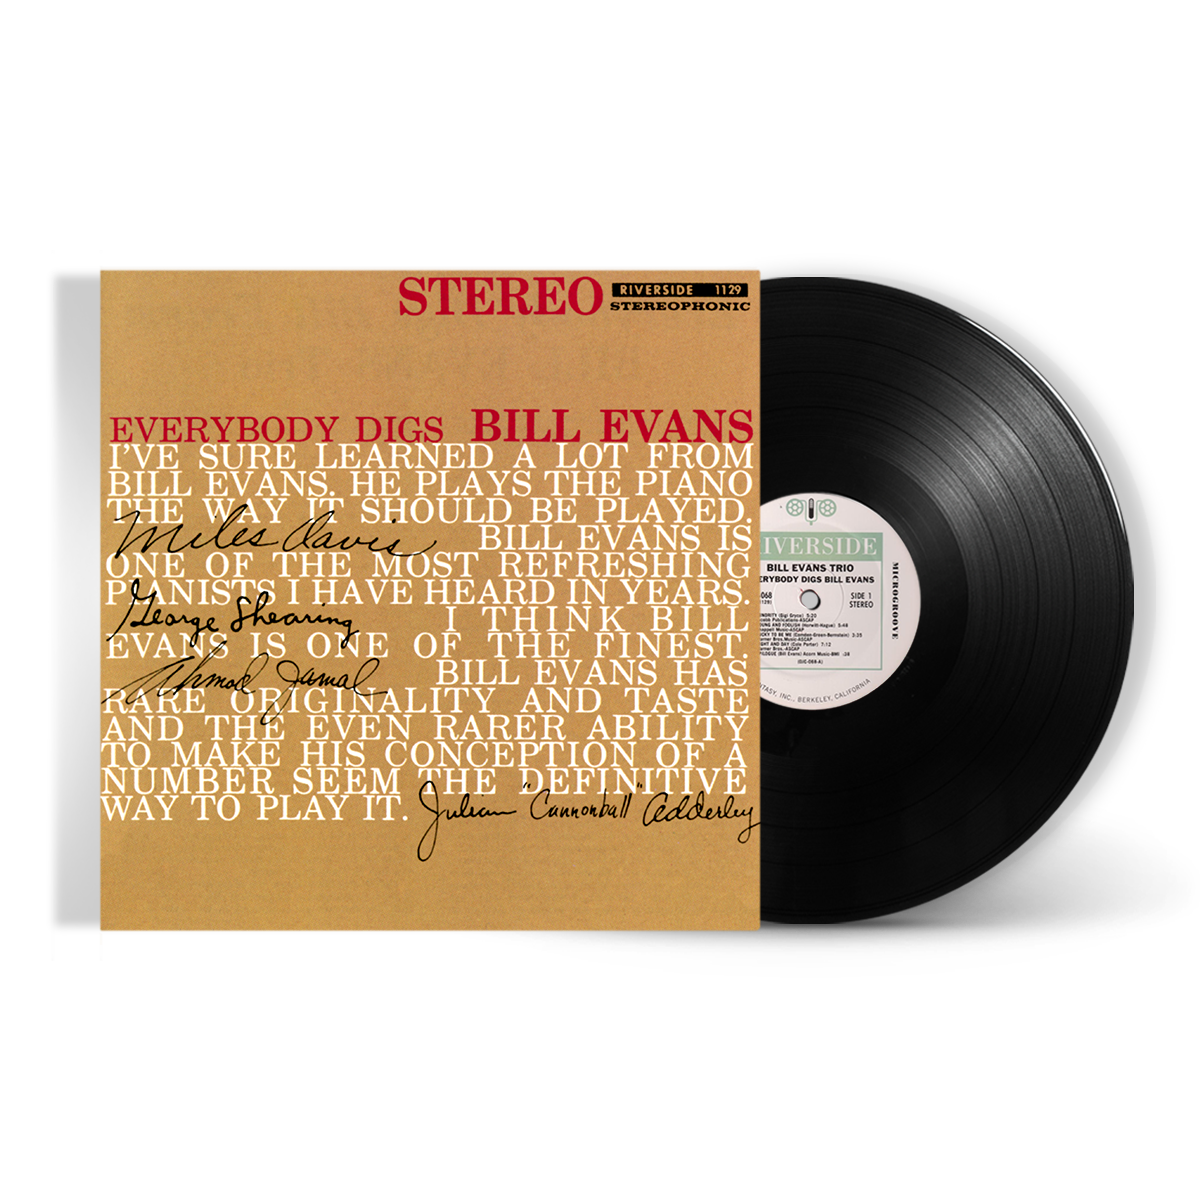 Everybody Digs Bill Evans (LP)